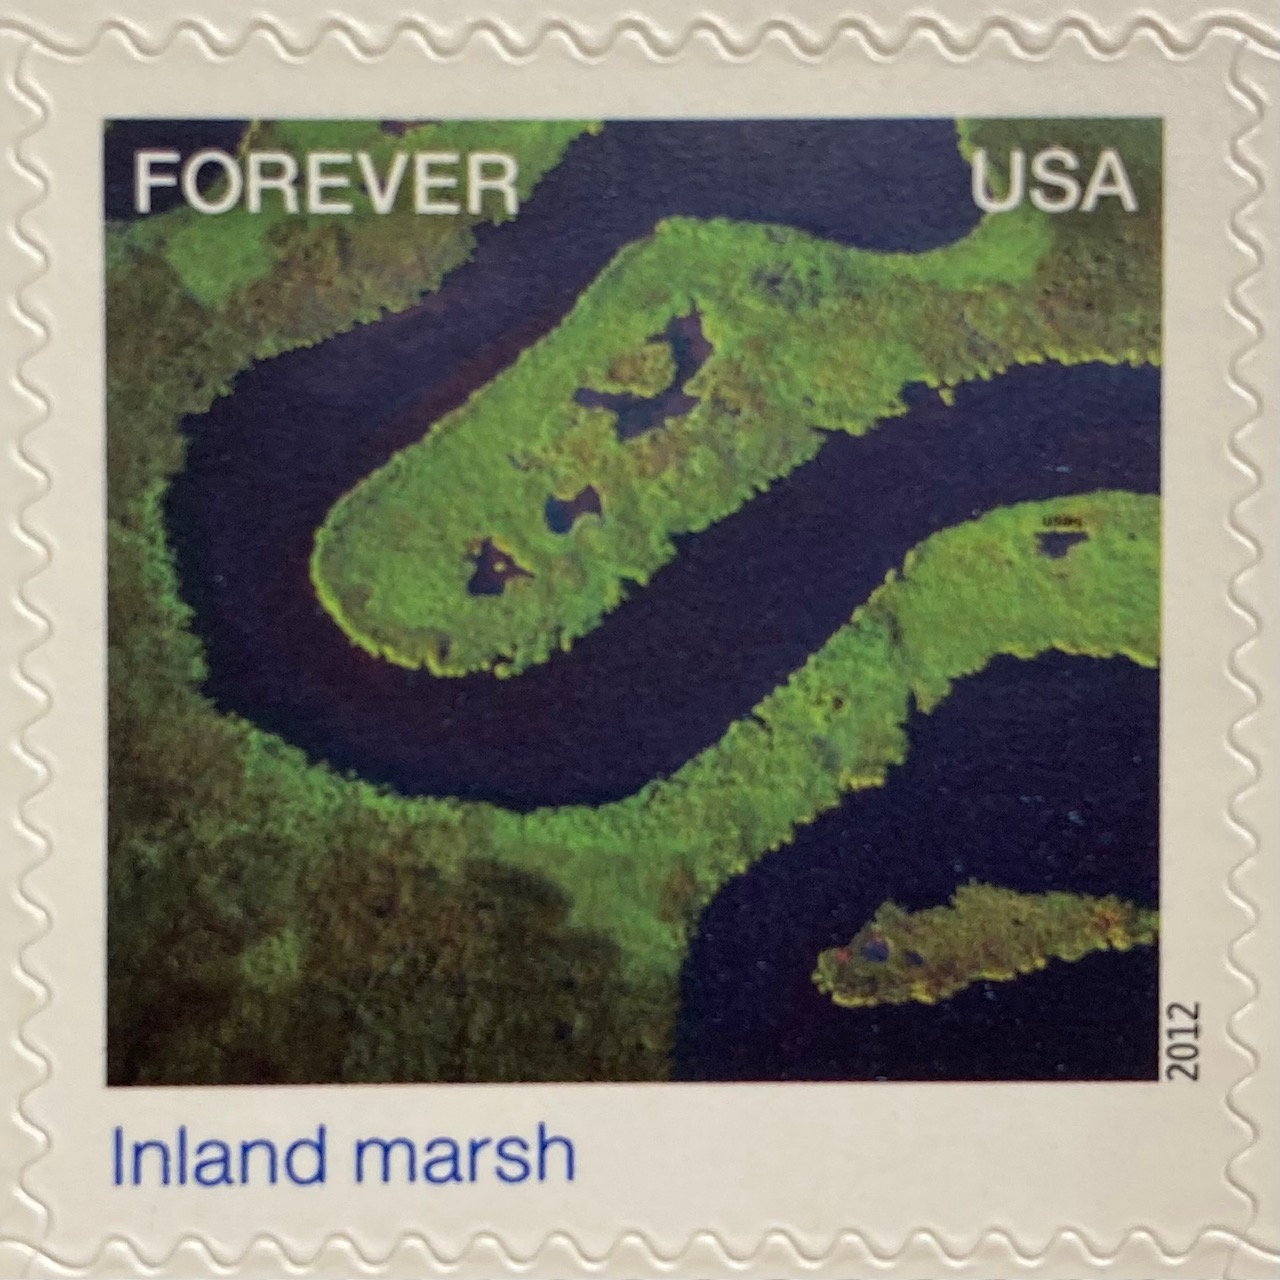 US Stamp of Marshland